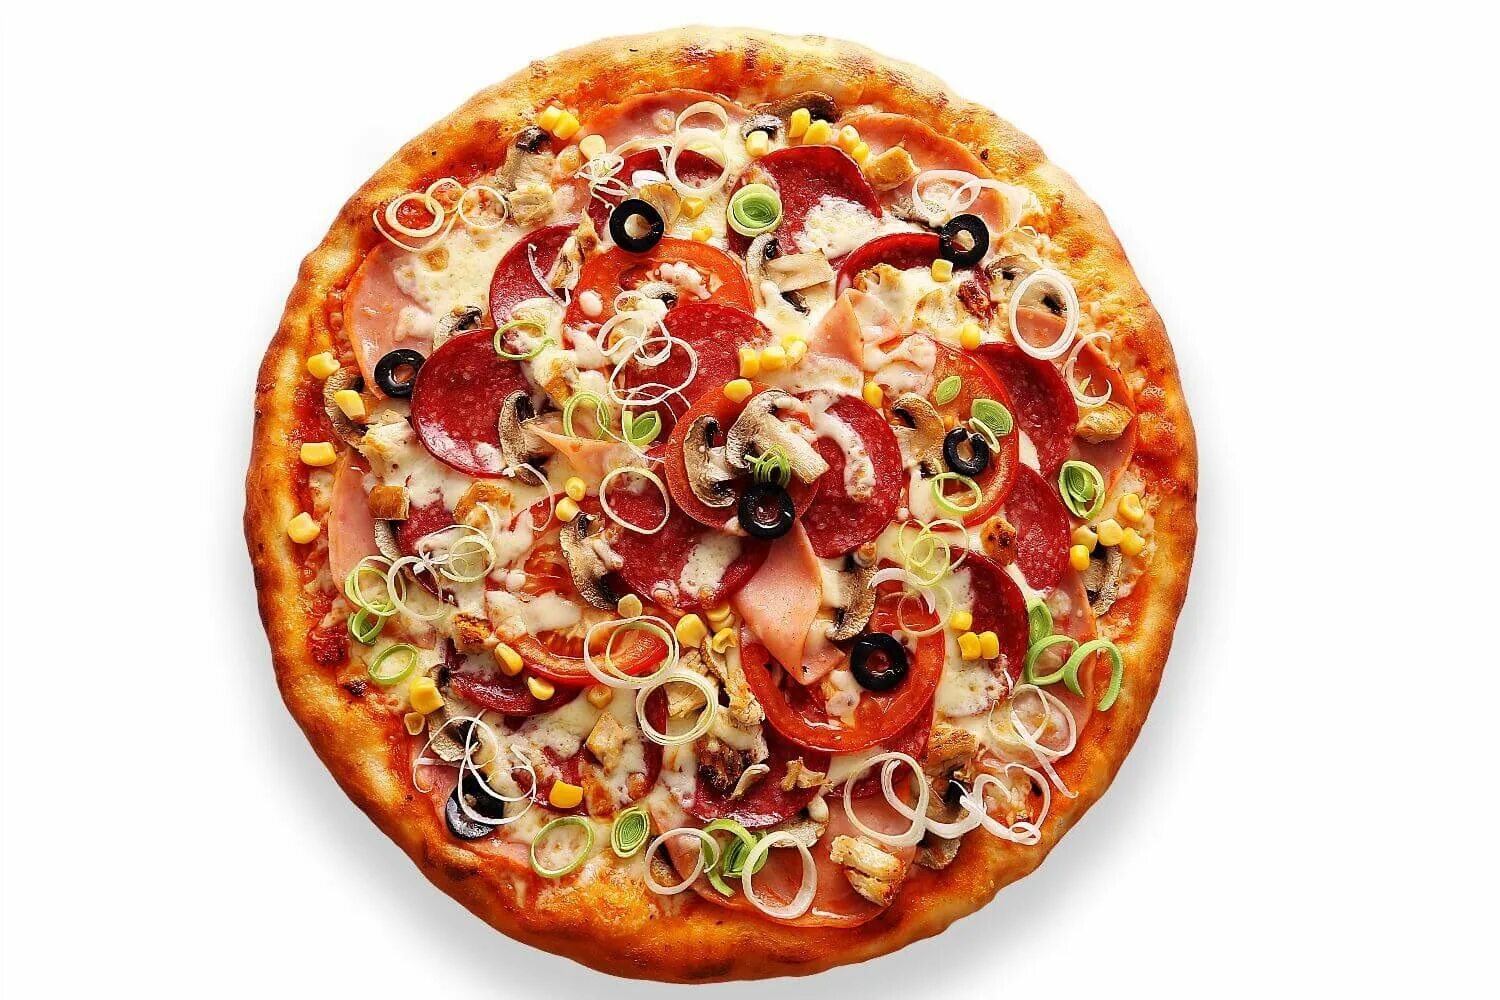 Окто пицца. "Пицца". Пицца сверху. Пицца на белом фоне. Сочная пицца.